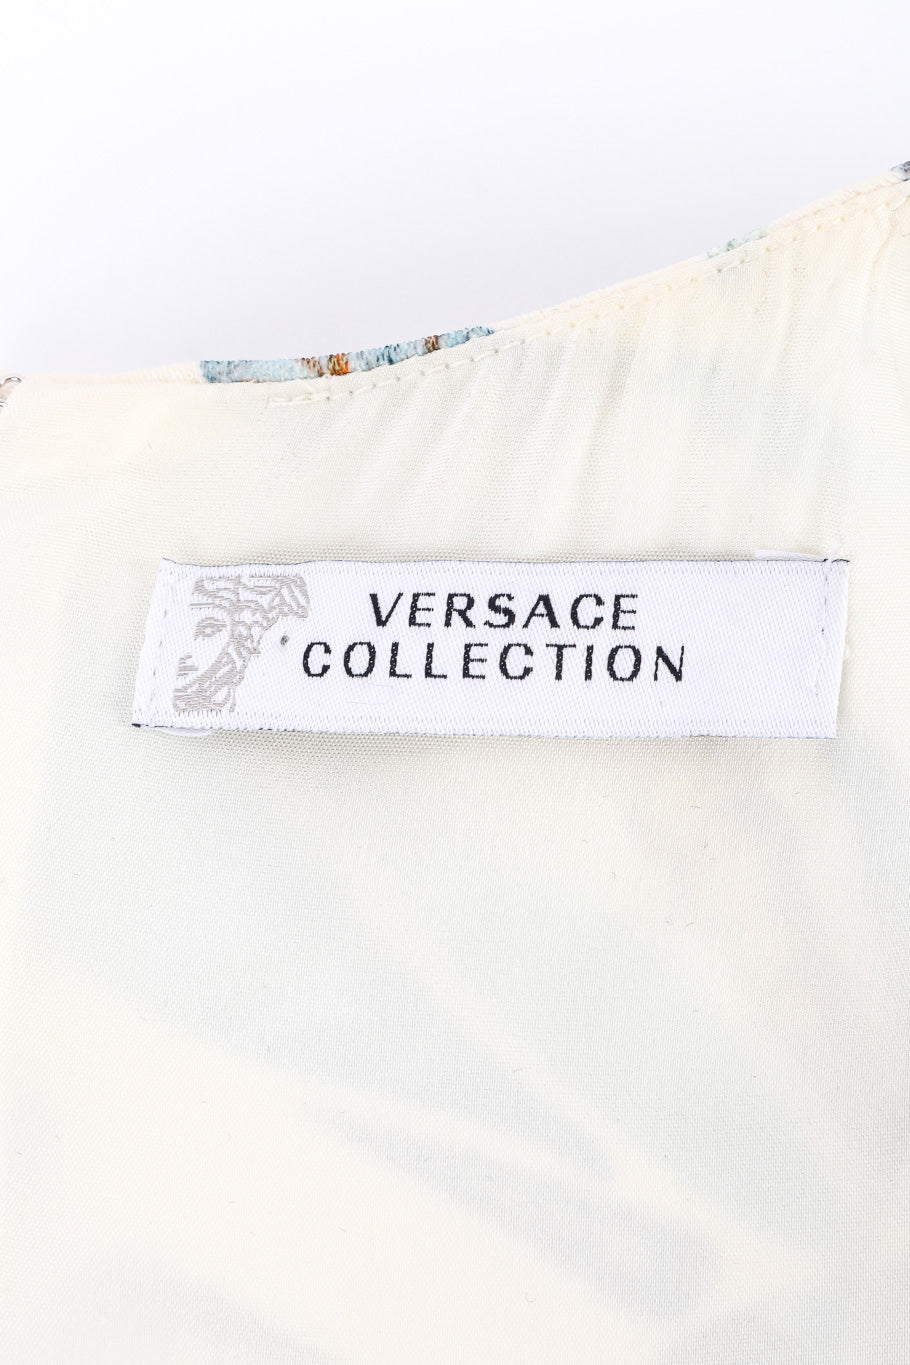 Versace Plume Print Mini Dress label closeup @Recessla